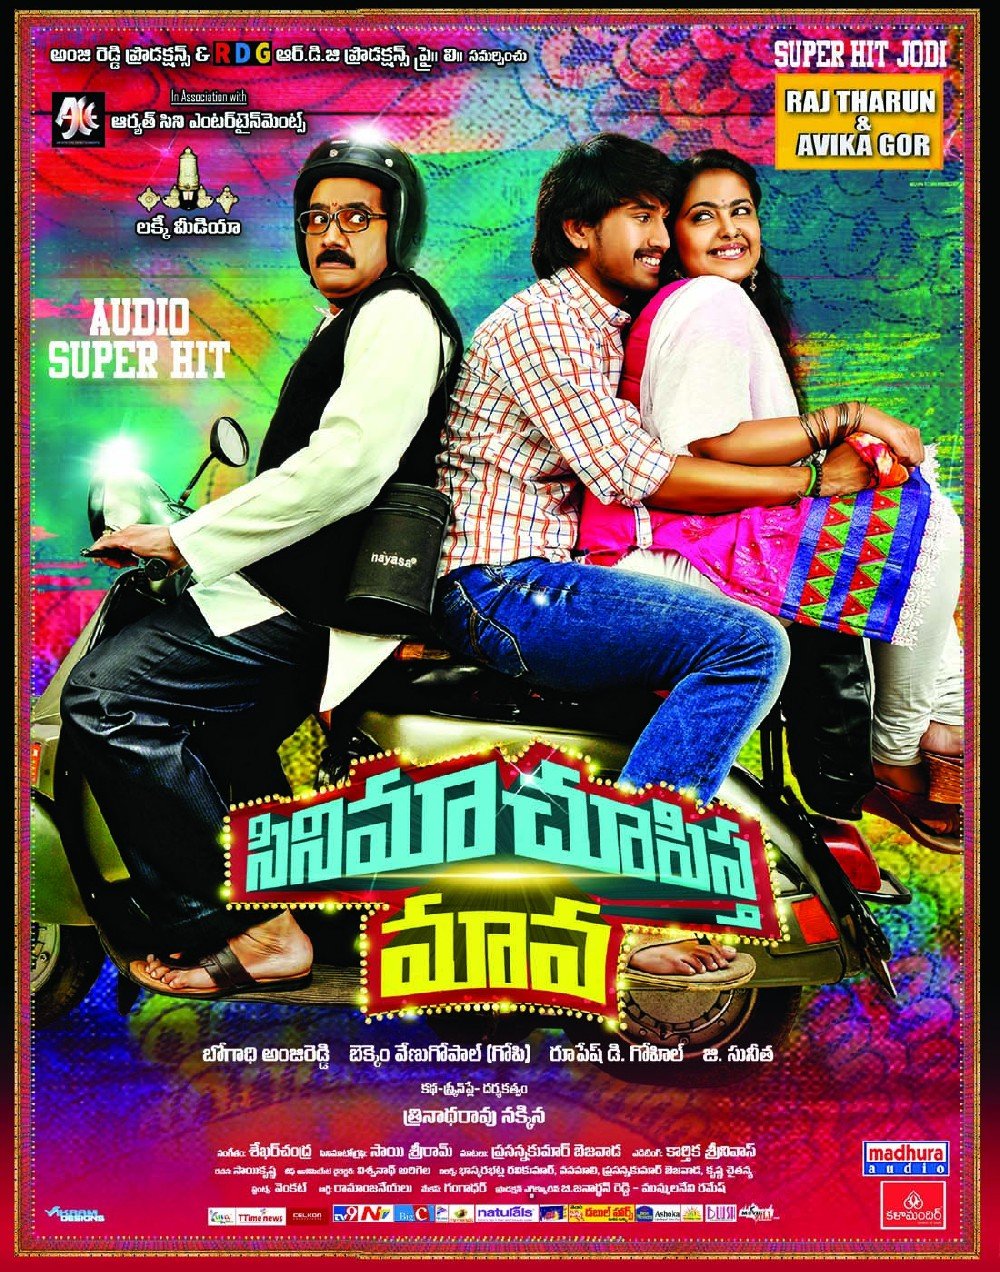 Telugu poster of the movie Cinema Chupista Maava